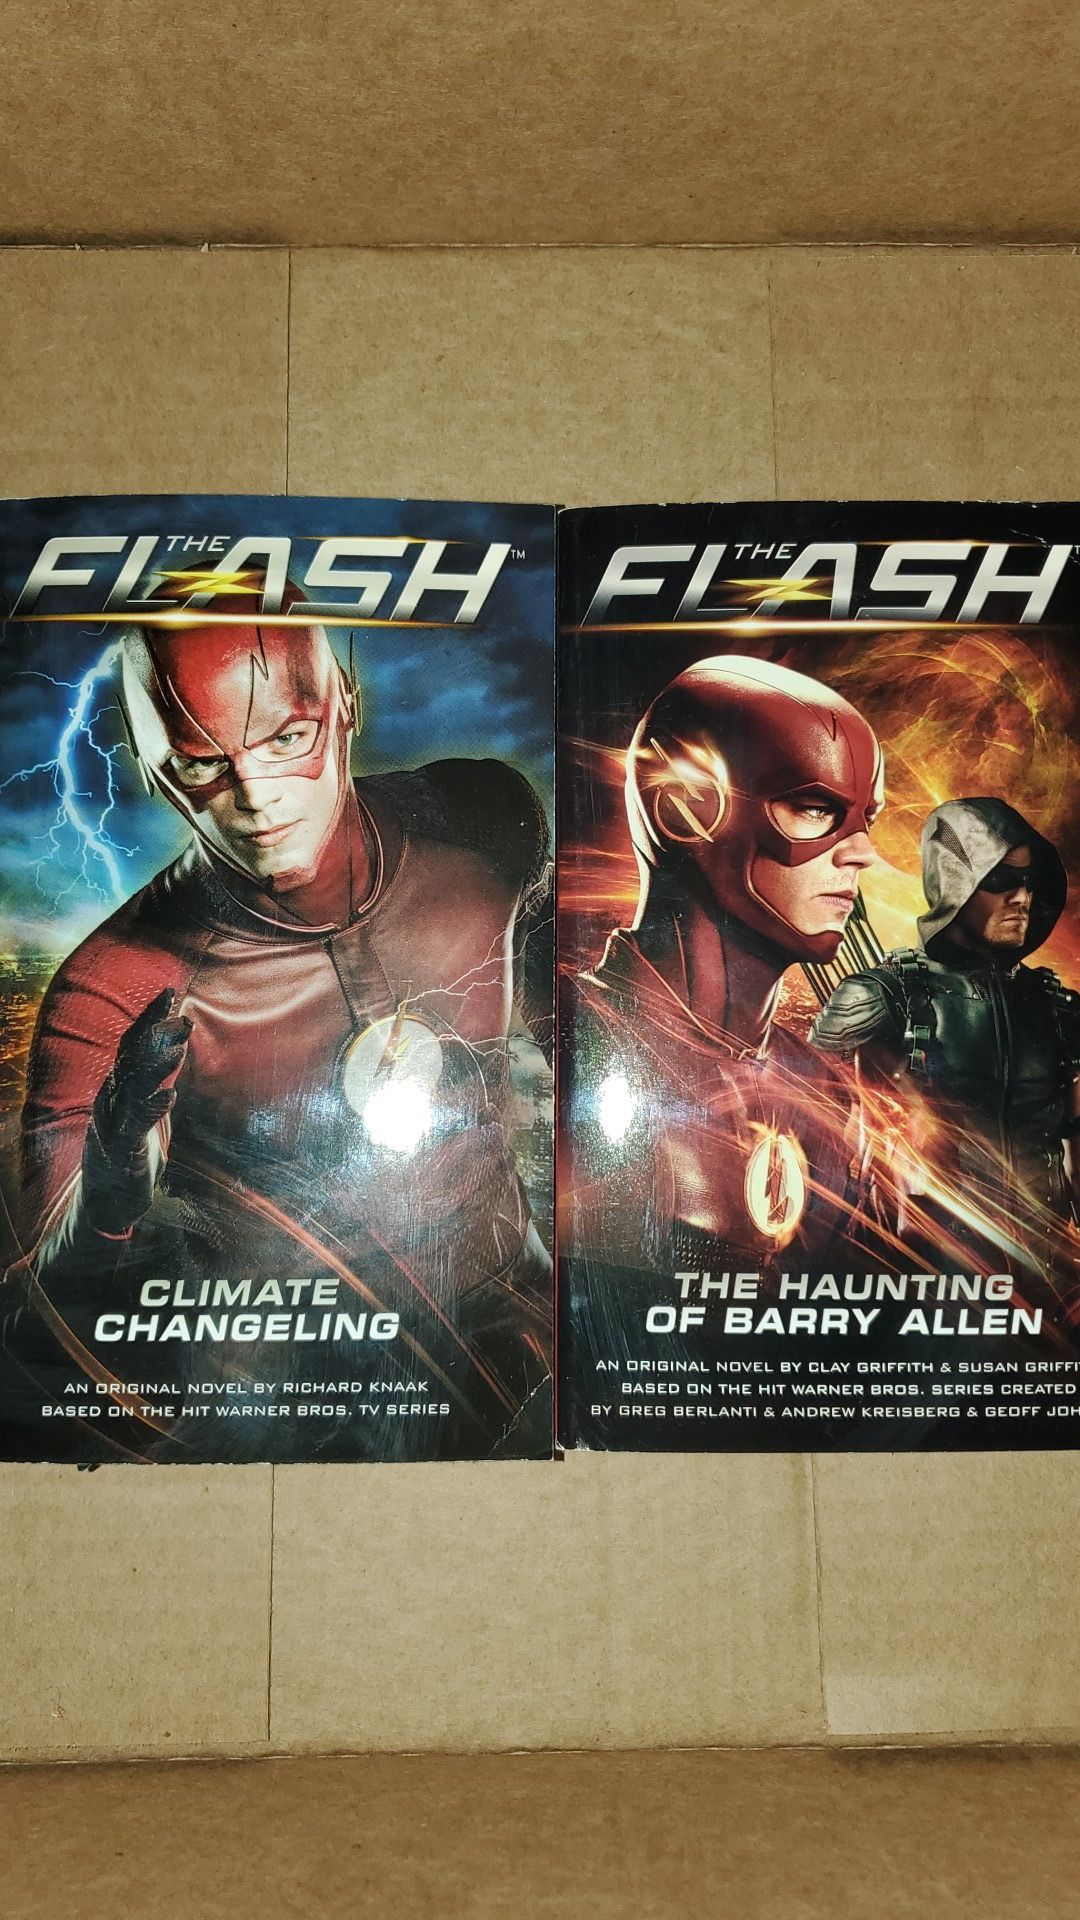 The Flash books